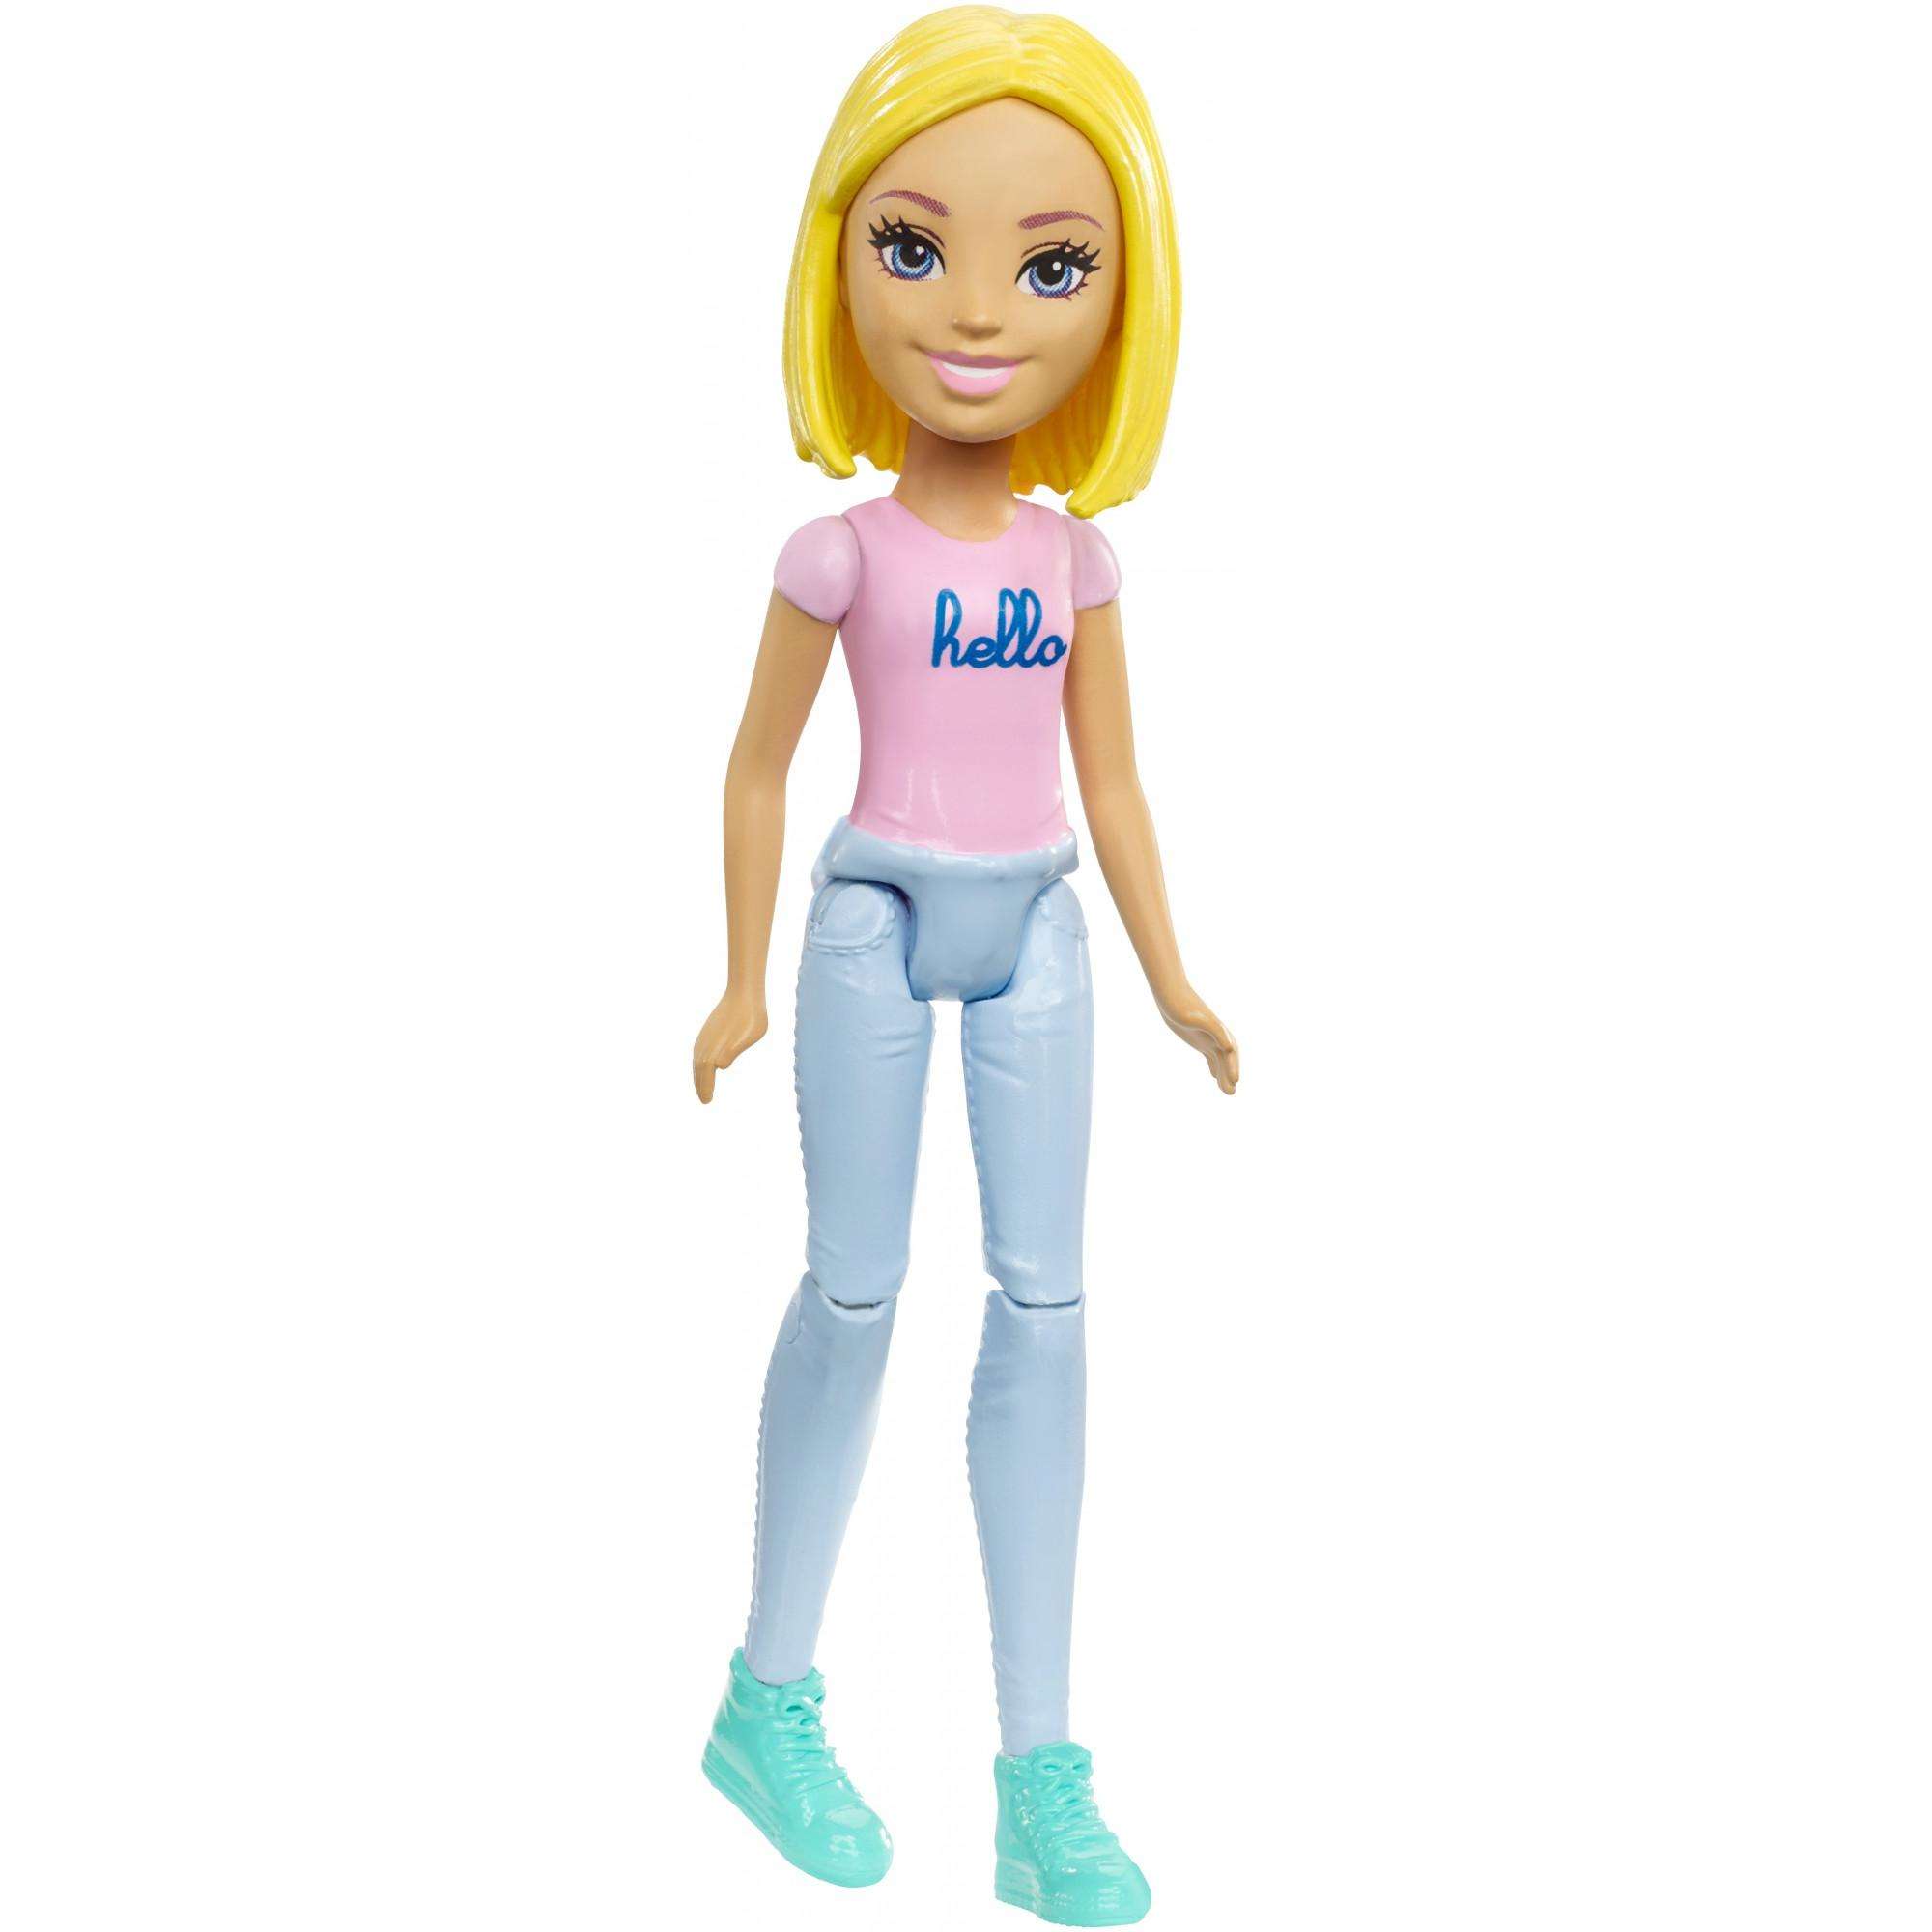 Мини куклы барби. Мини-кукла "Барби: в движении" - Pink, 11 см. Кукла Barbie в движении Pink, 11 см, fhv73. Мини-кукла Барби в движении 11 см Mattel fhv55. Кукла Барби 11 см Barbie on the go.